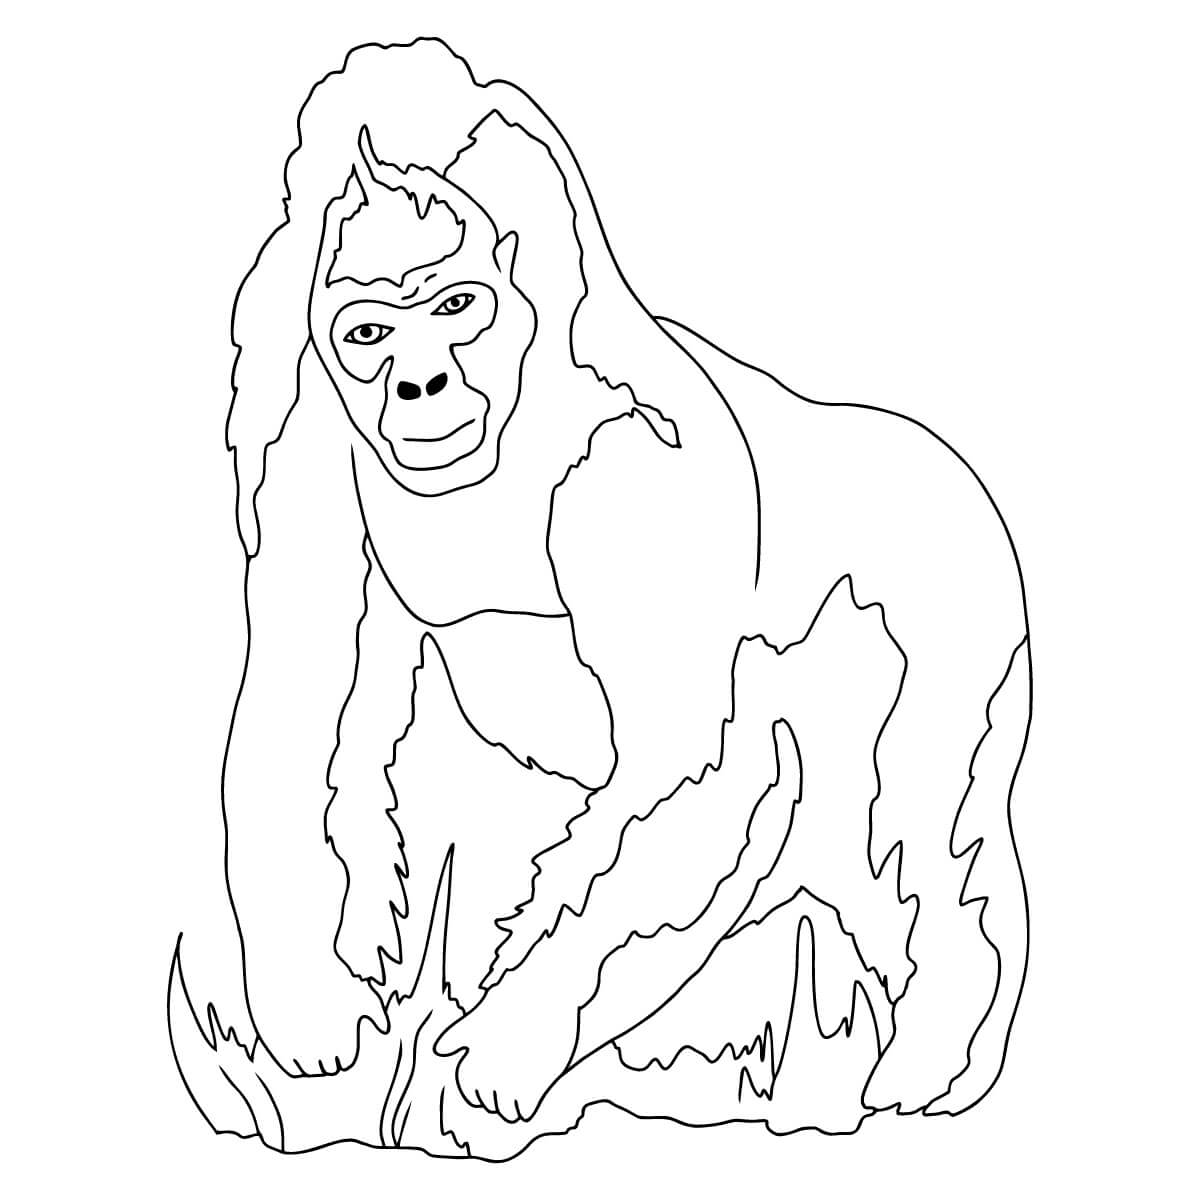 Dibujos de Gorila Perfecto para colorear